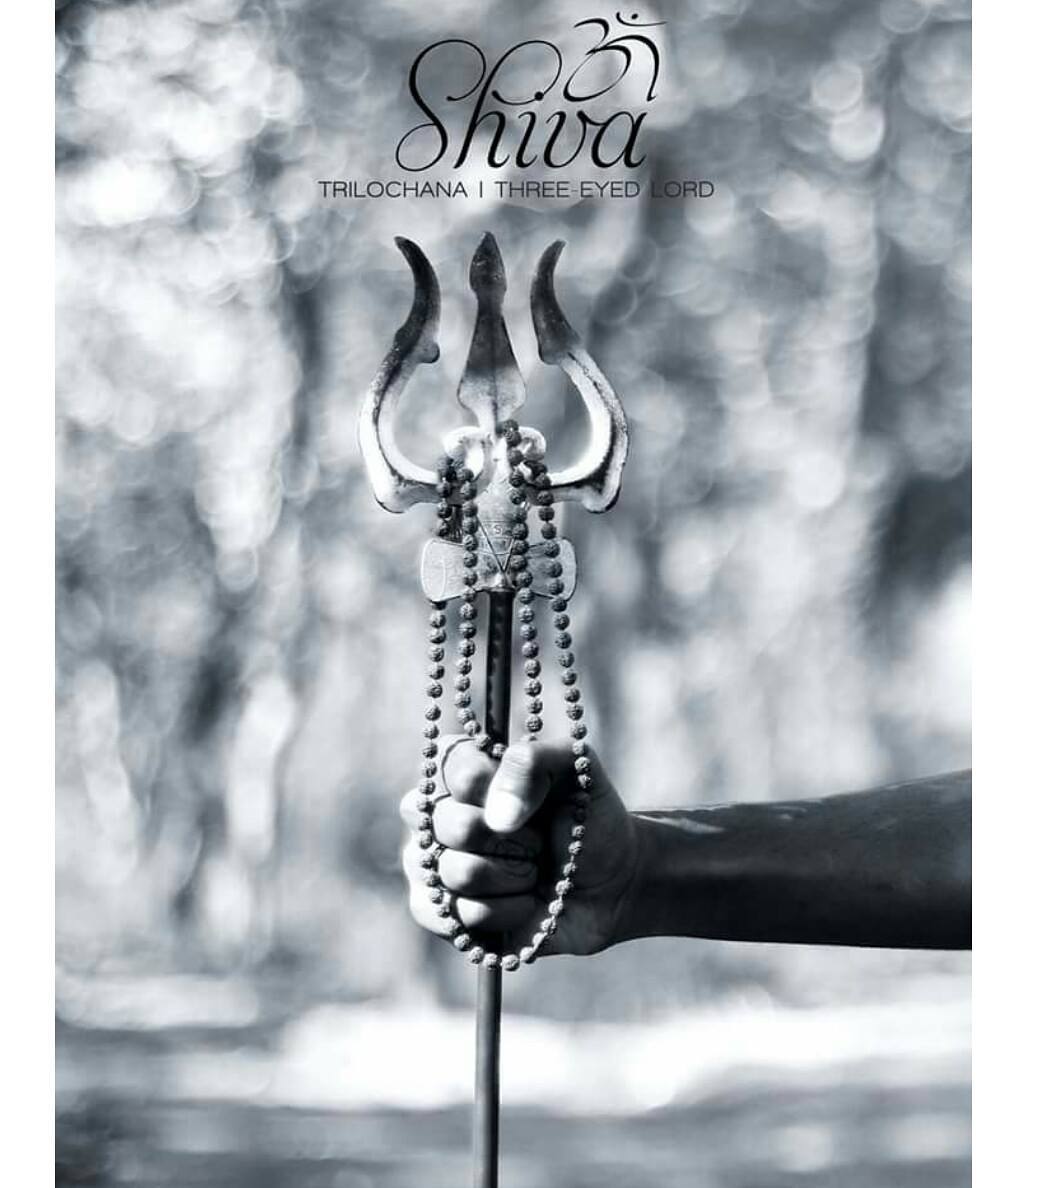 Ohm Shiva

#Trishoolin | One who has a trident in his hands &
#Trilochana | Three-Eyed Lord

MahaShivratri Concept Shoot by : Dip Thakkar & Հիօ ՀօիօլւՀ թզԻէի

@dip_memento_photography | @memento_photography

#om #ohmShiva #omshiv #omshiva #Shivratri #LordShiva #festival #India #gujaratifestivals #shivlord #conceptphotoshoot #photography #kidsphotography #kidsshoot
#bholenath #lordshiva #shiva #festival #photooftheday #picoftheday #conceptart #photo #photoshoot #instagram #instagood